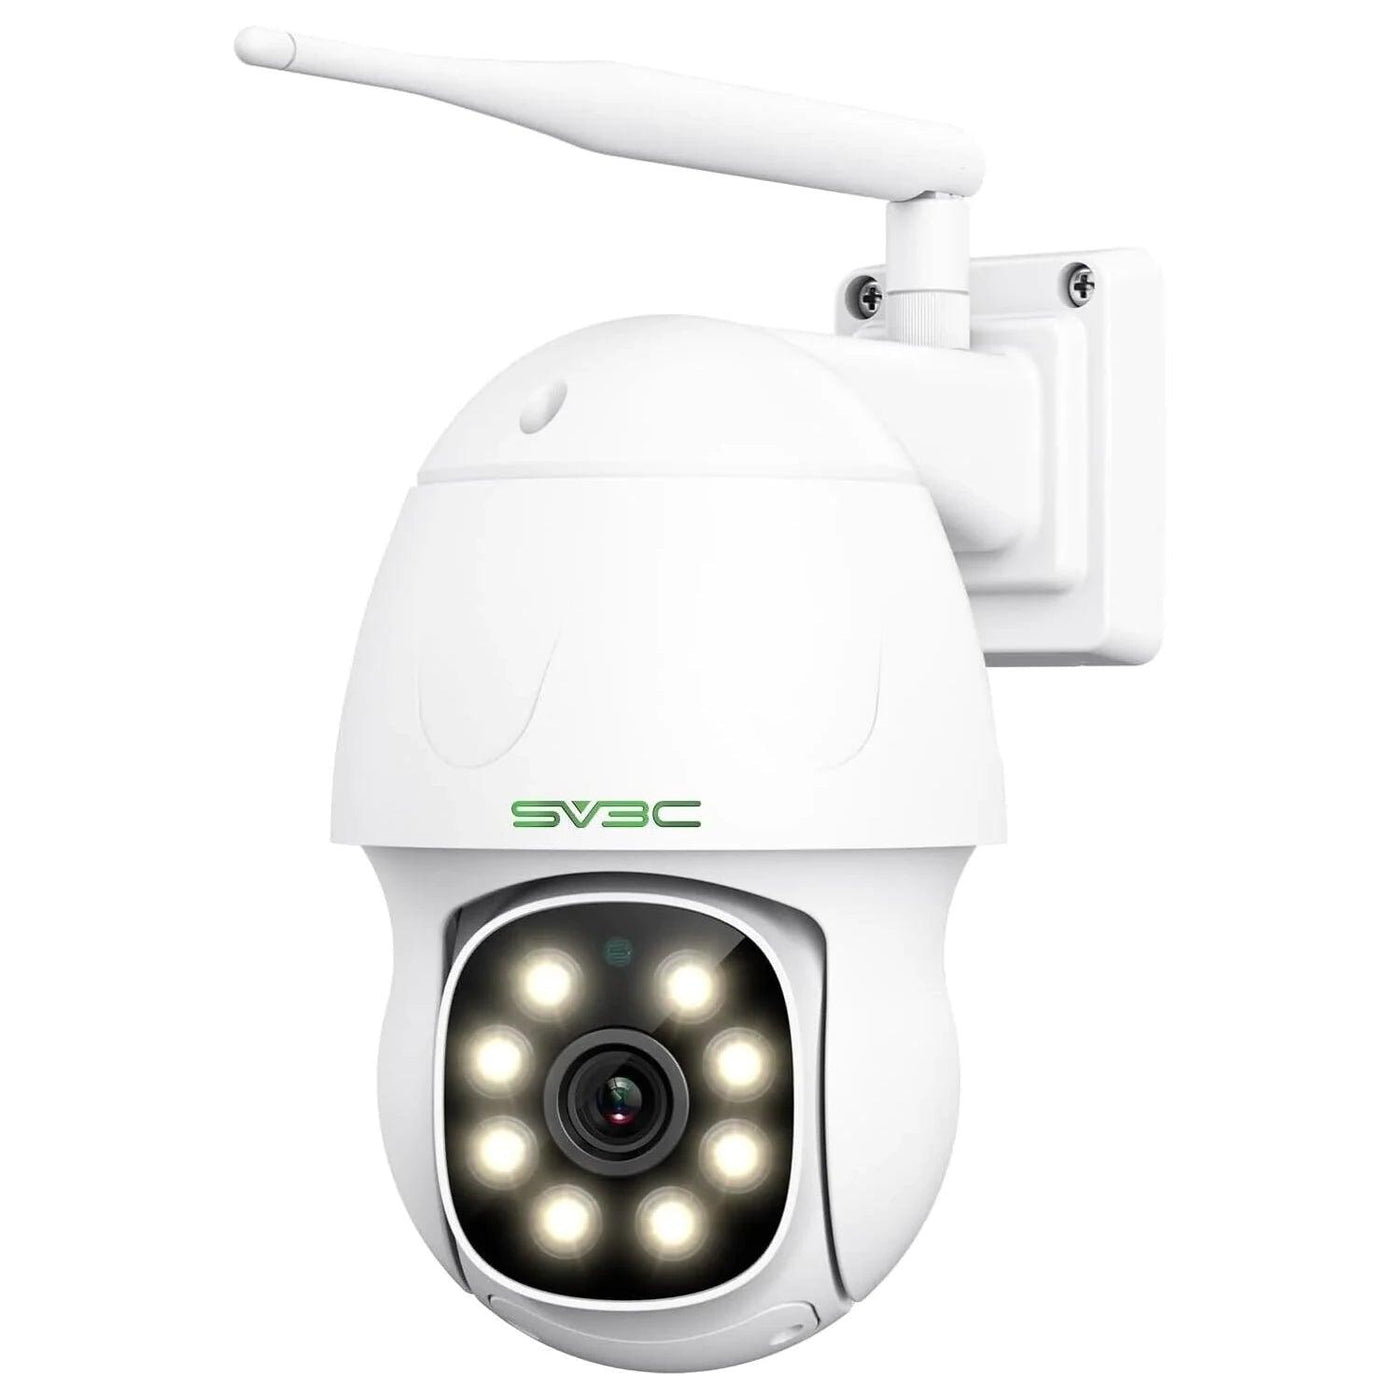 SV3C New PTZ Security Camera Outdoor 5MP Rotate Pan & Tilt IP CCTV - Massive Discounts